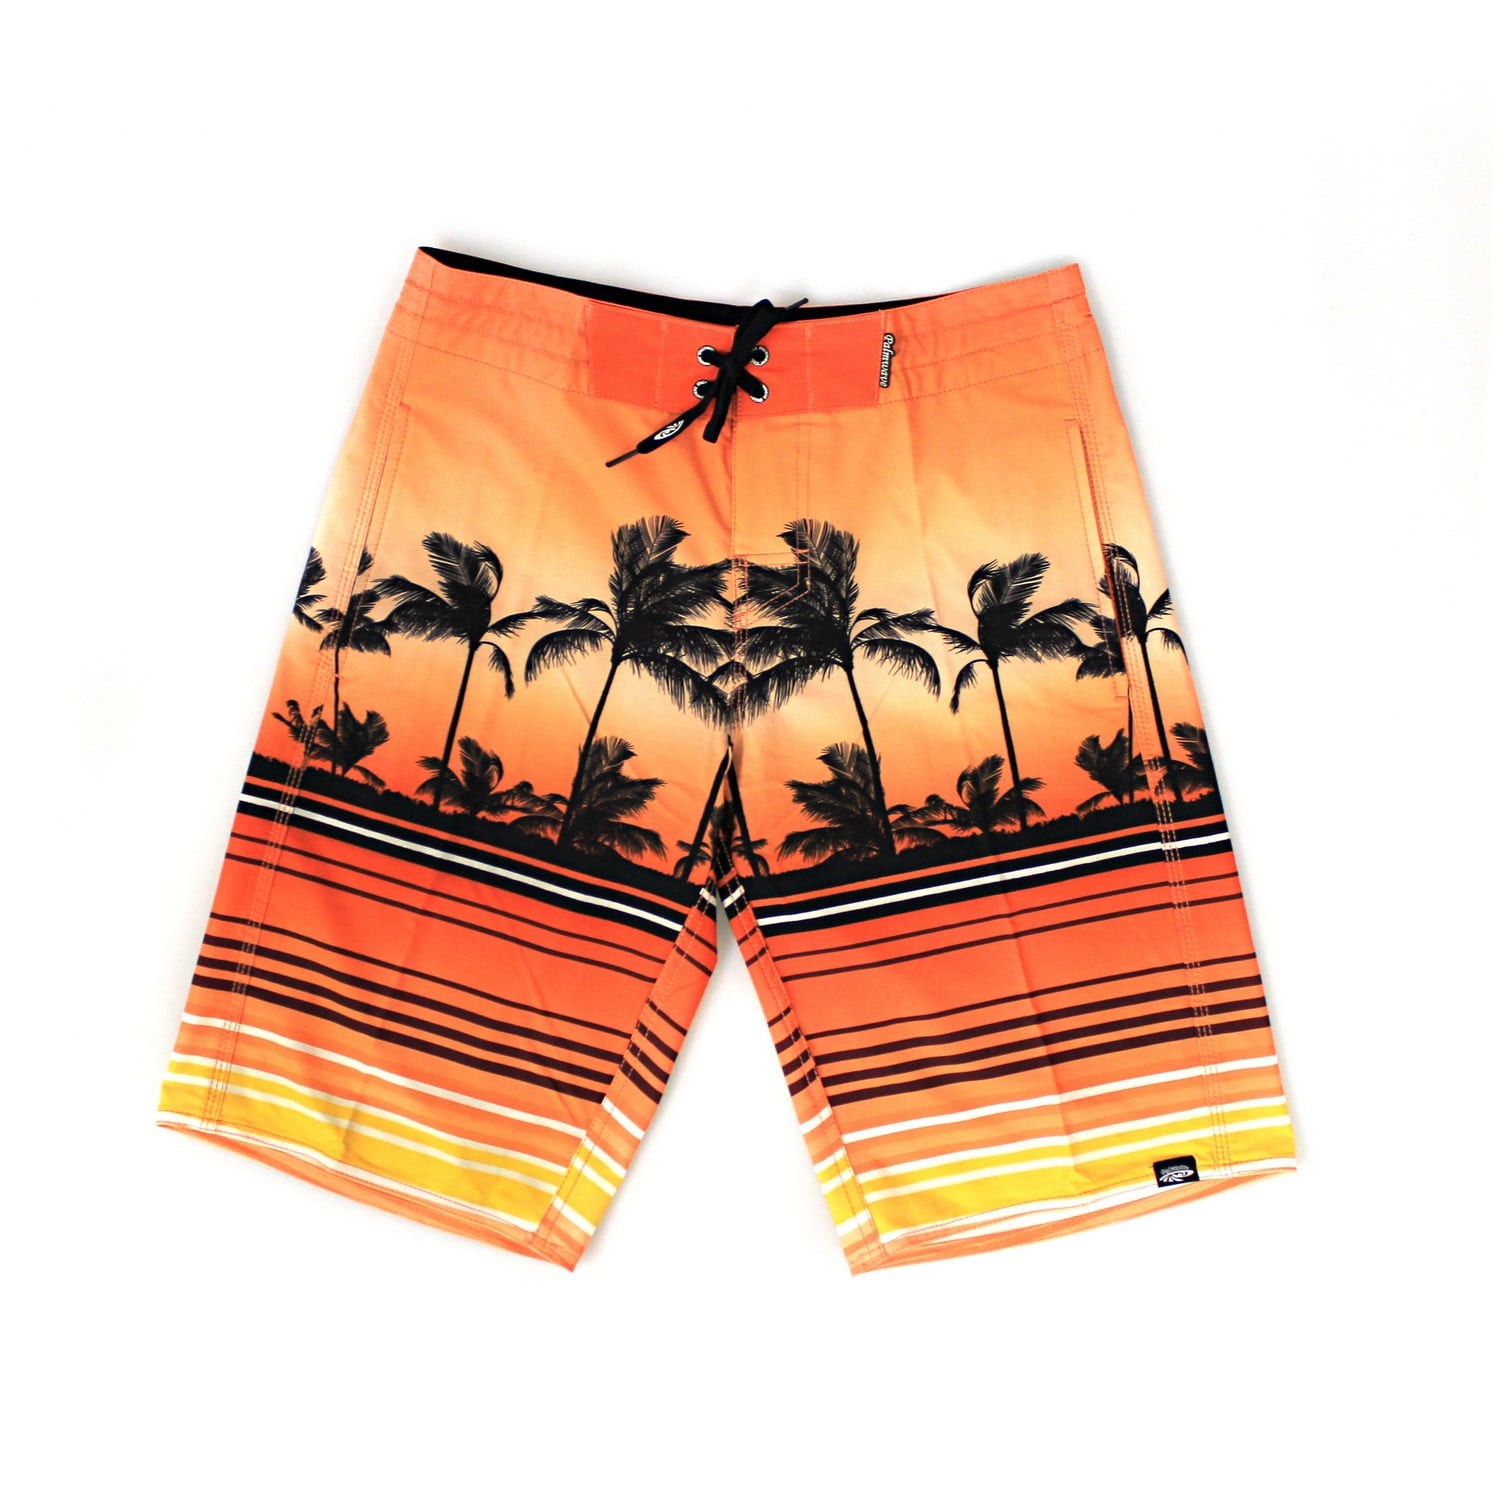 Details about   Men’s Regatta Hadden Beach Sun Mesh Lined Trunks Board Swim Shorts RRP £30 